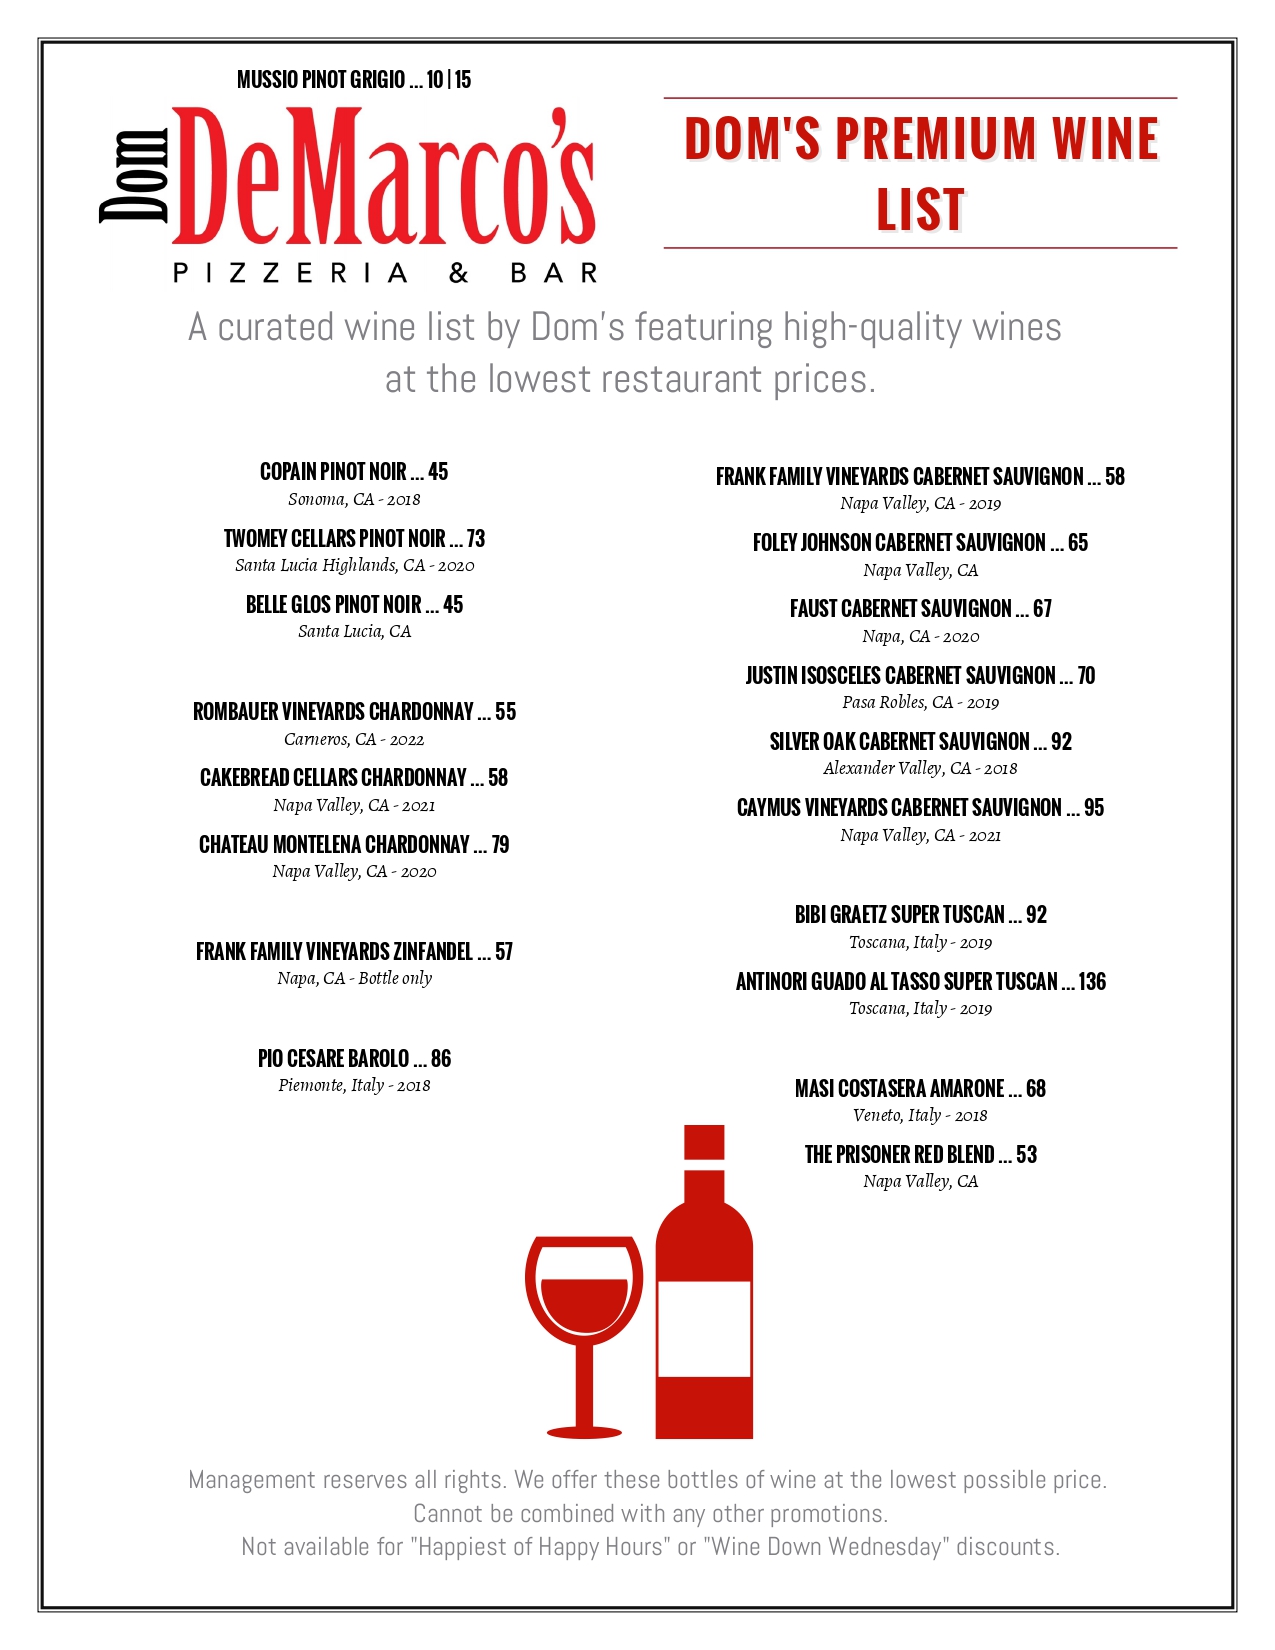 Dom's Premium Wine List